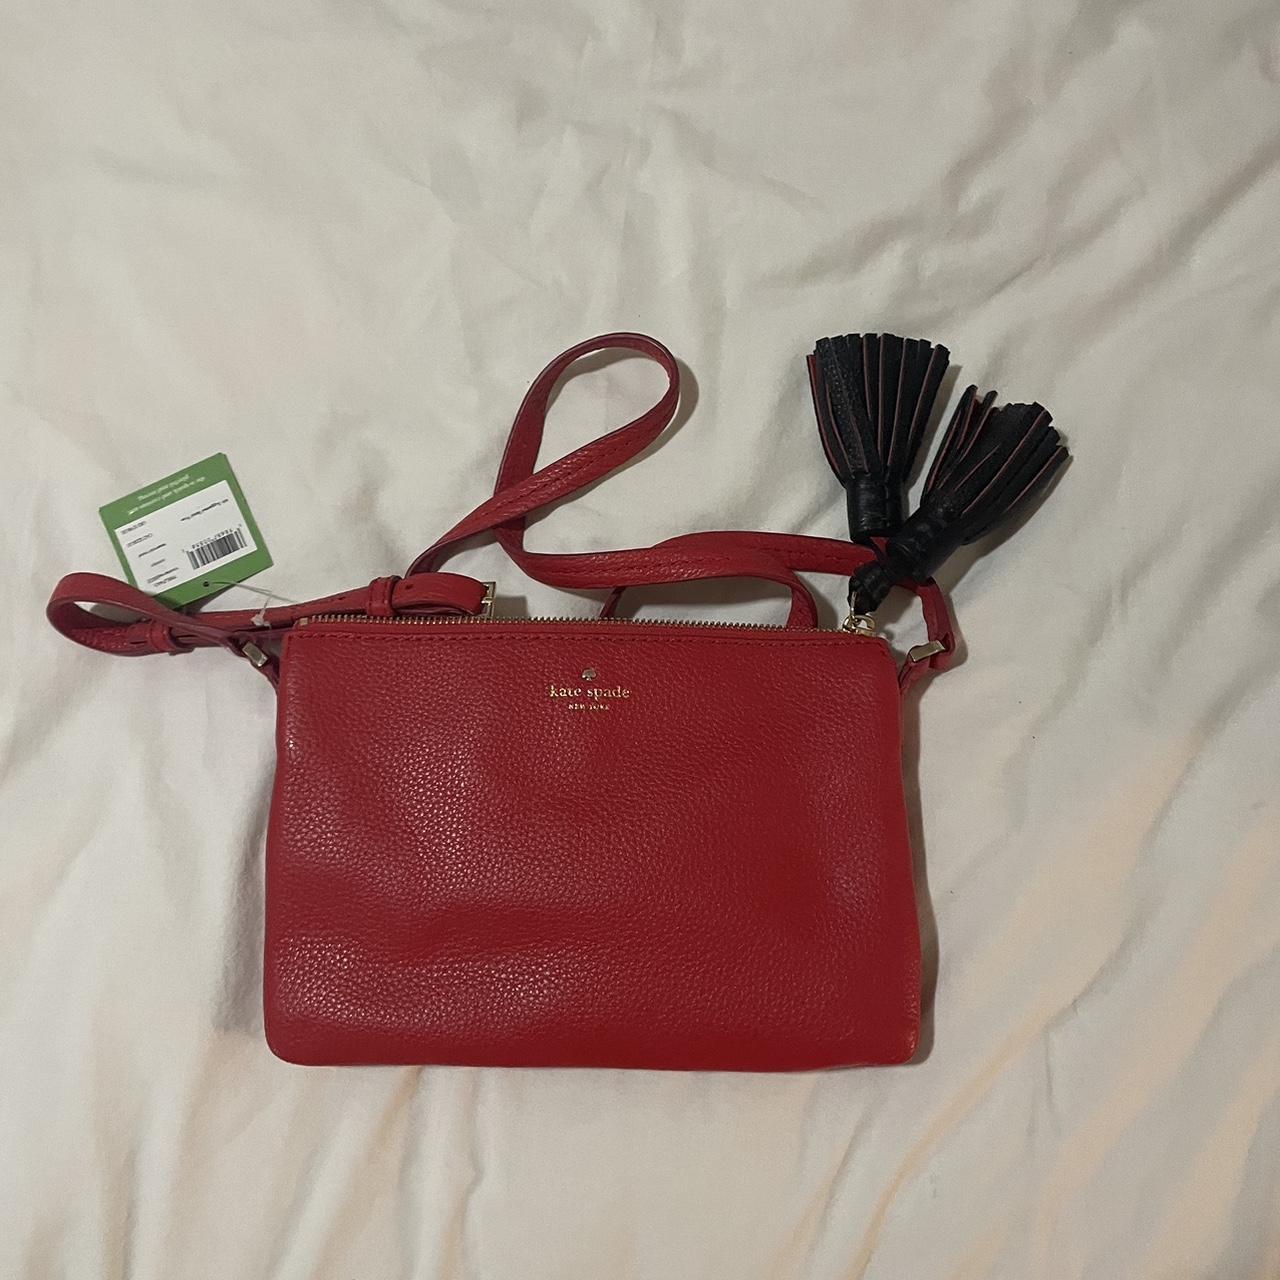 Cute Red Handbag - Red Purse - Vegan Leather Purse - $59.00 - Lulus